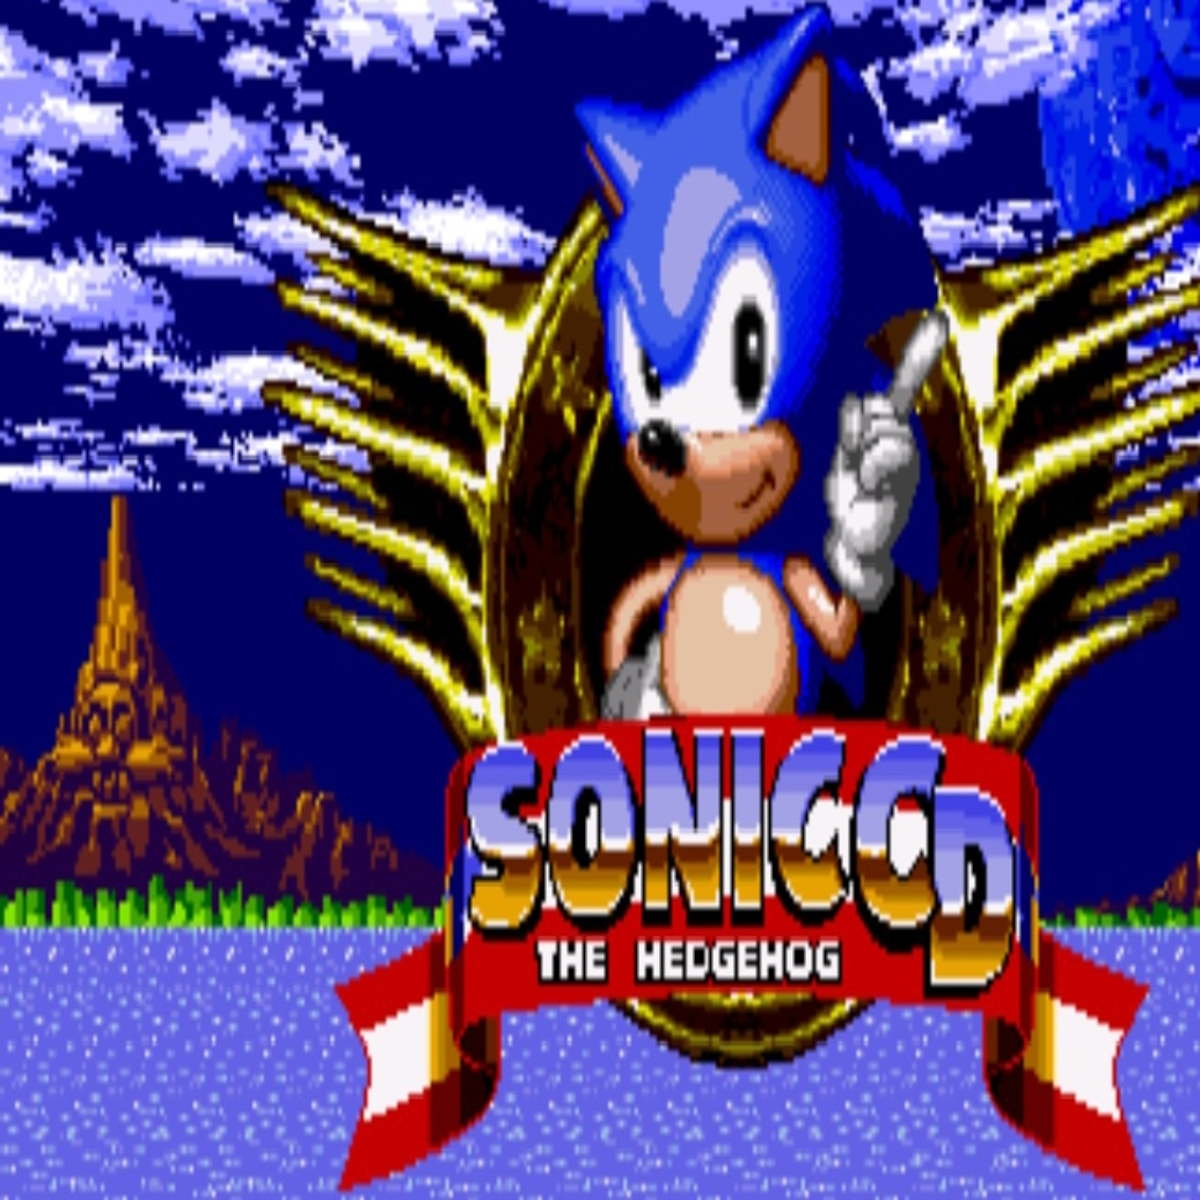  Sonic CD - PC : Video Games